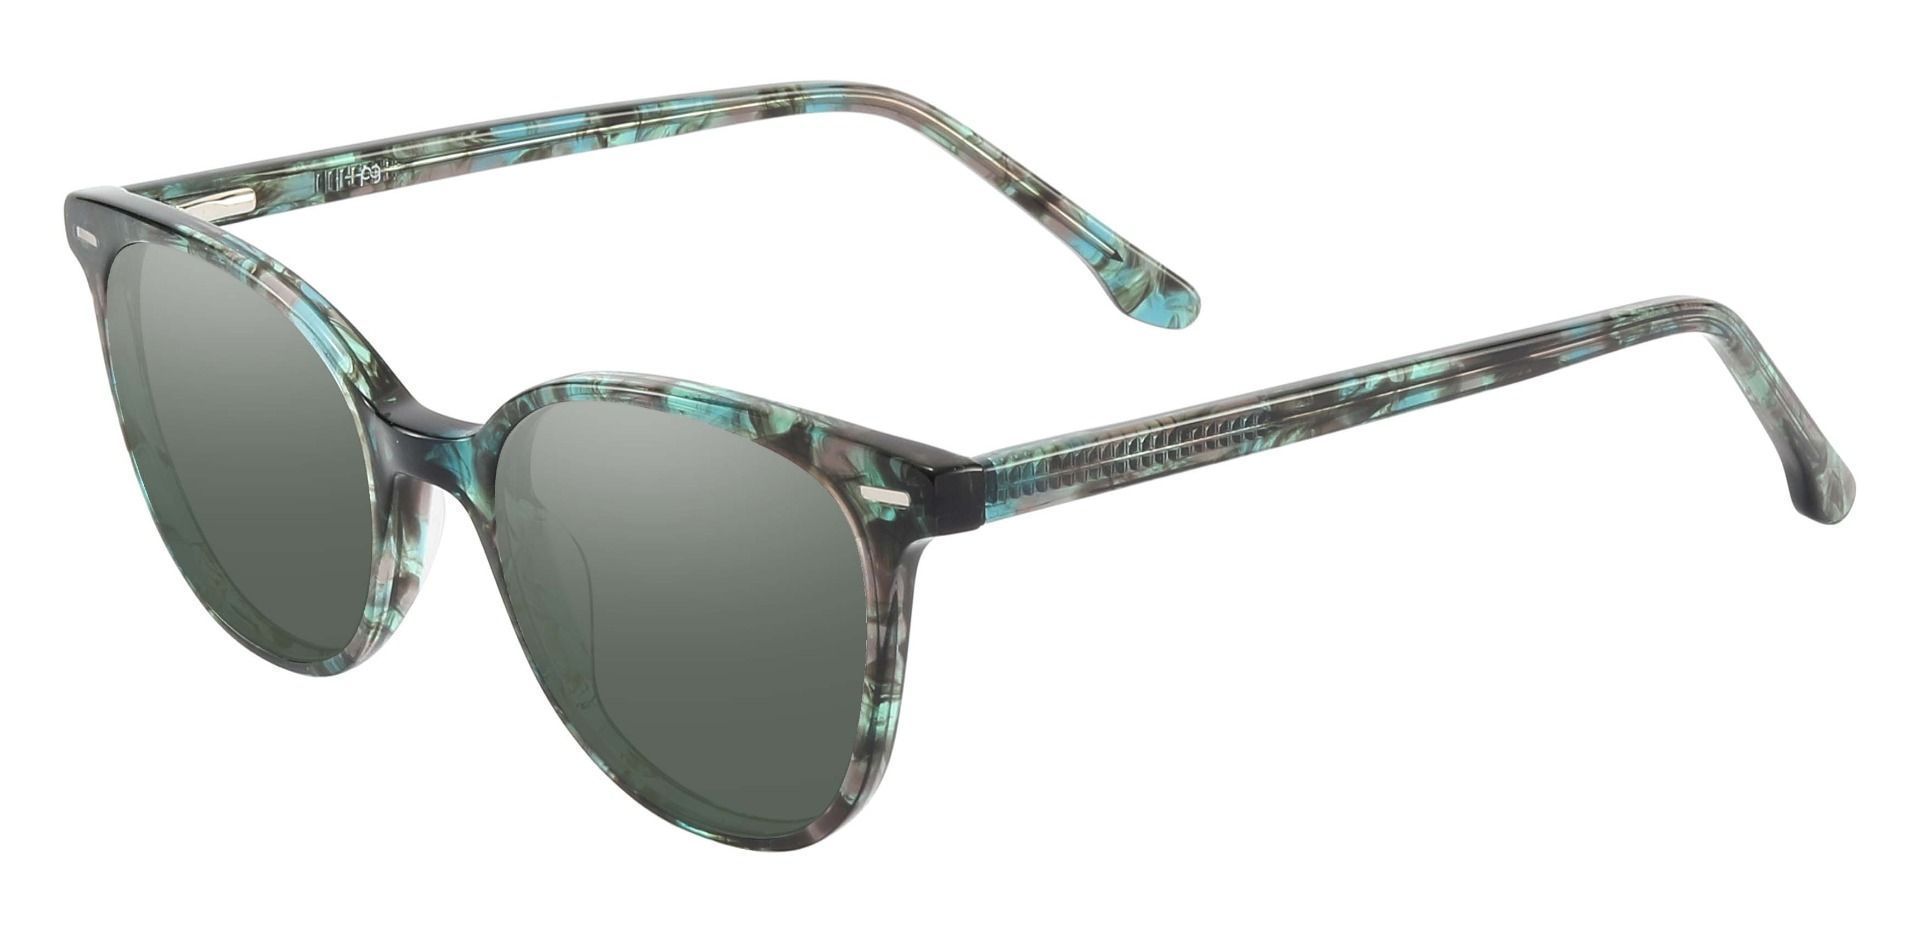 Chili Oval Progressive Sunglasses - Green Frame With Green Lenses